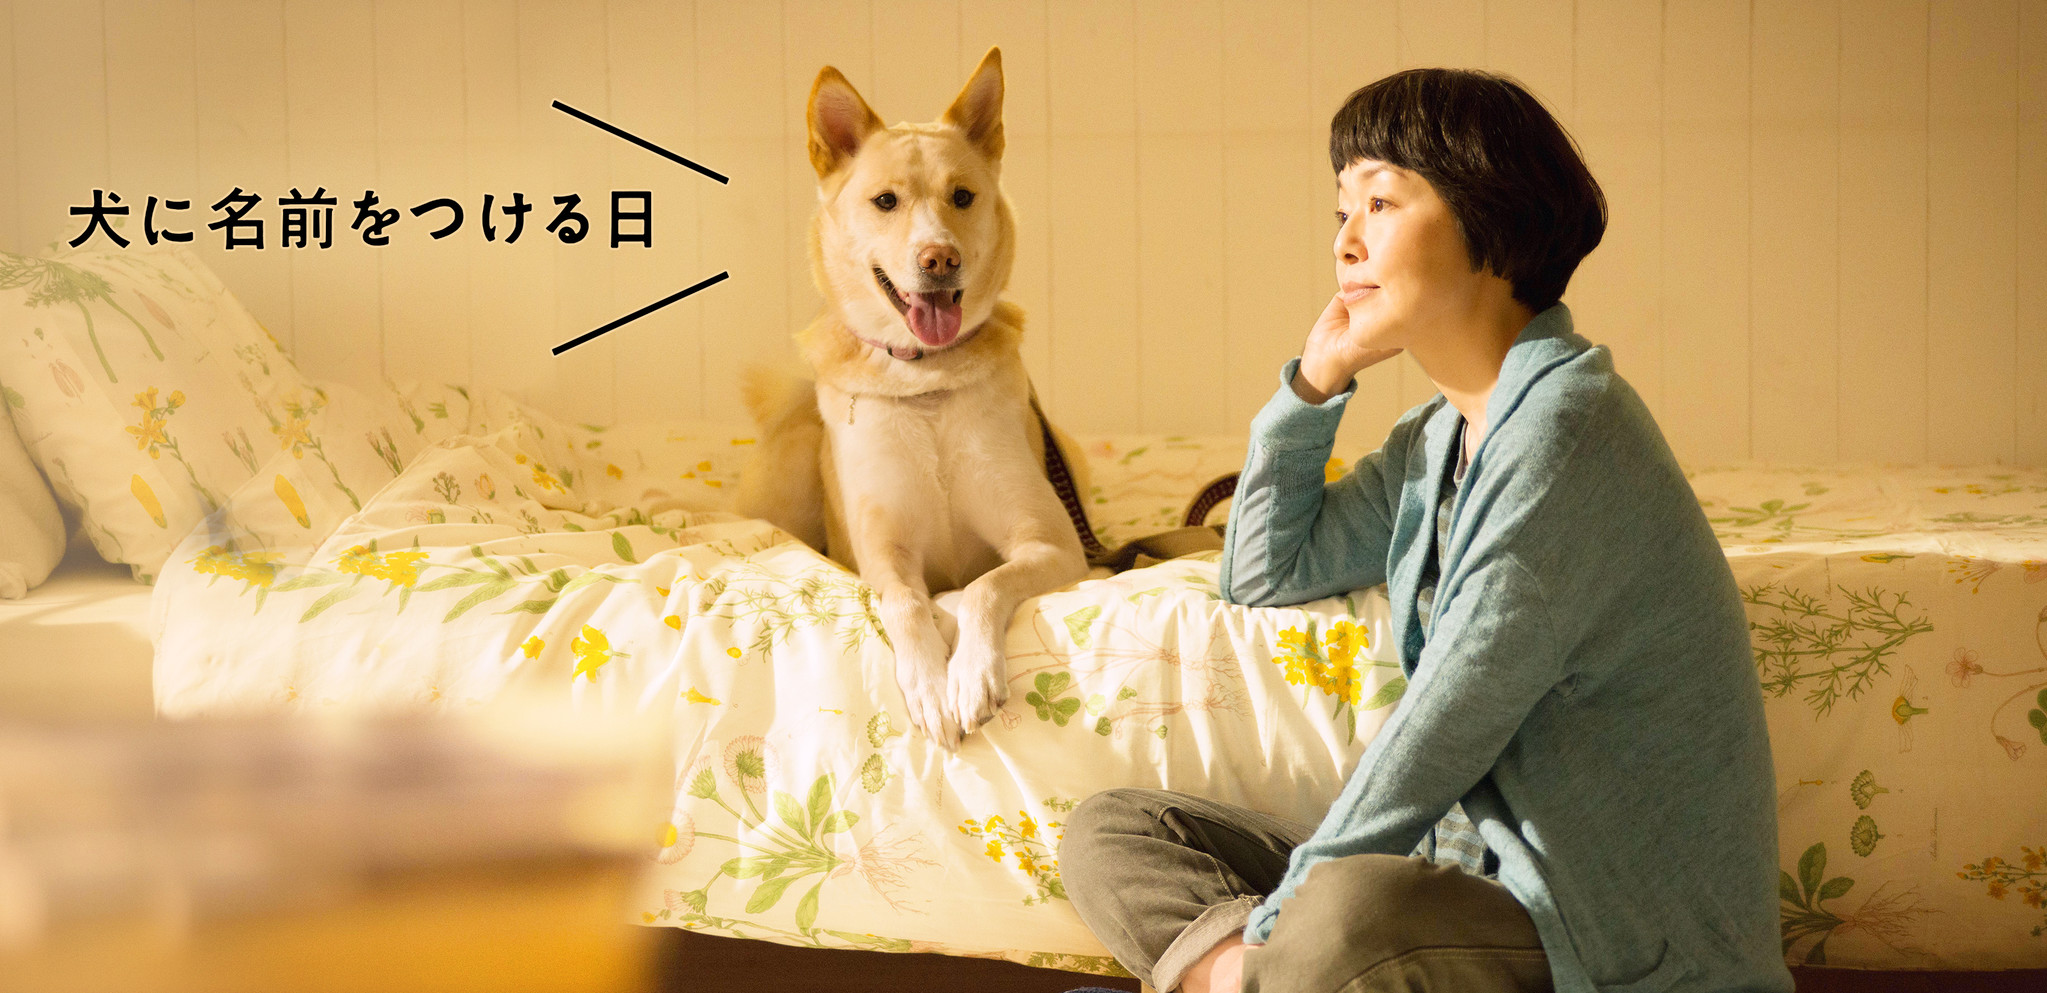 Dvdベストセラー１位 映画 犬に名前をつける日 小林聡美主演 Dvd発売記念イベント開催 株式会社 スモールホープベイプロダクションのプレスリリース